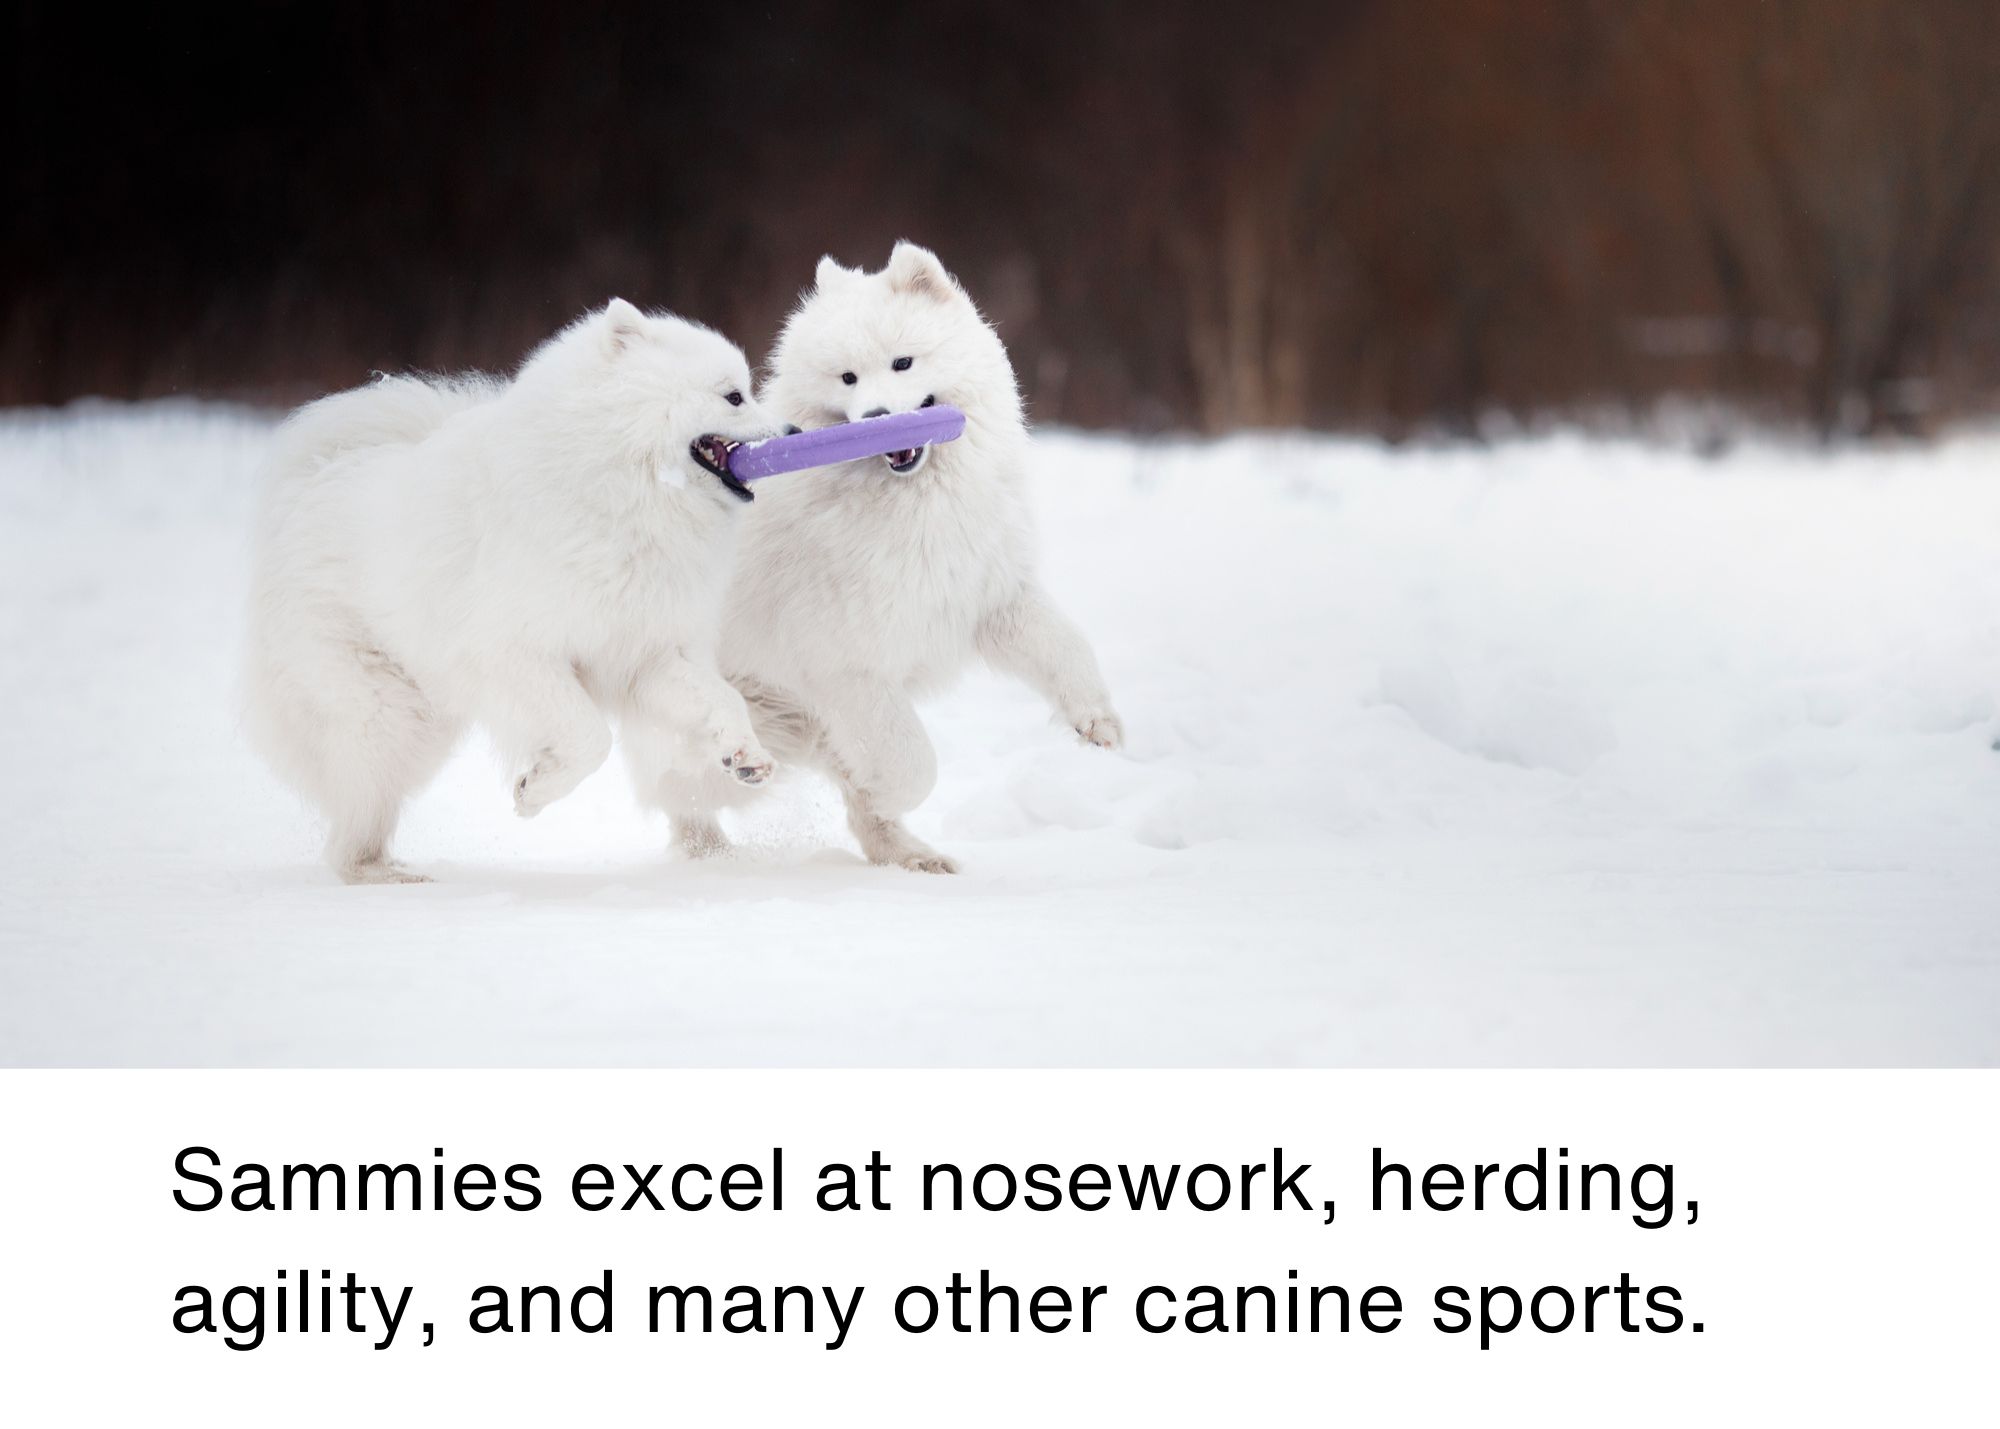 nosework, herding, canine sports